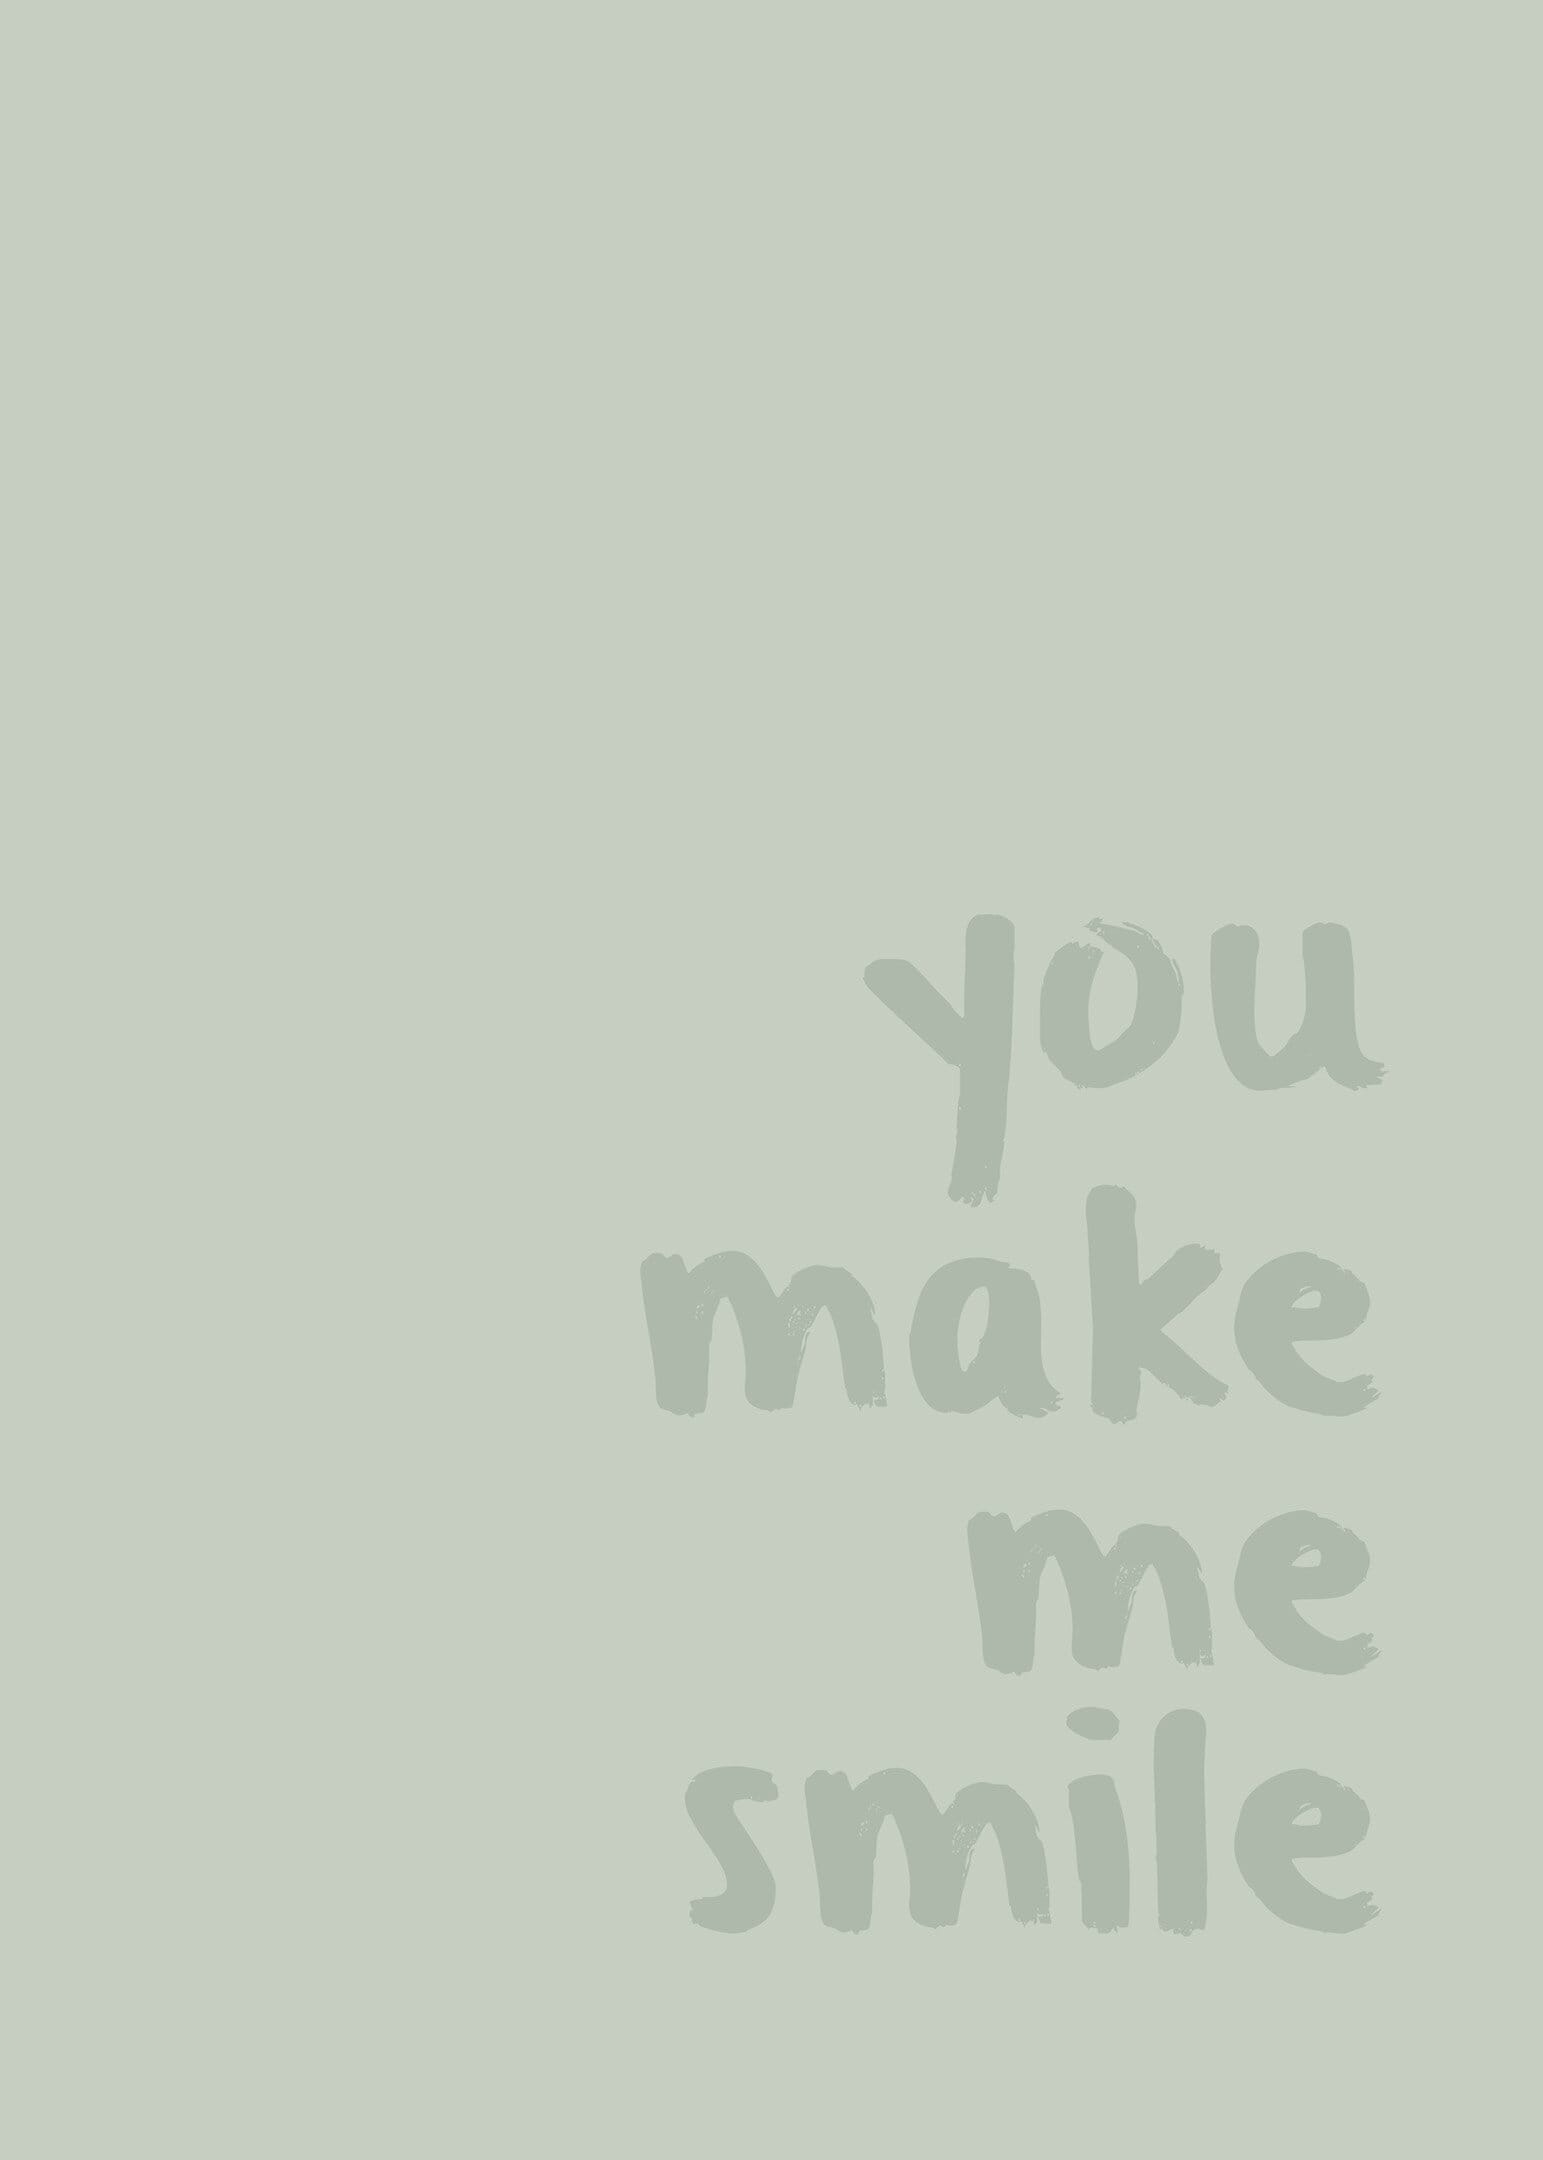 You make me smile grön poster